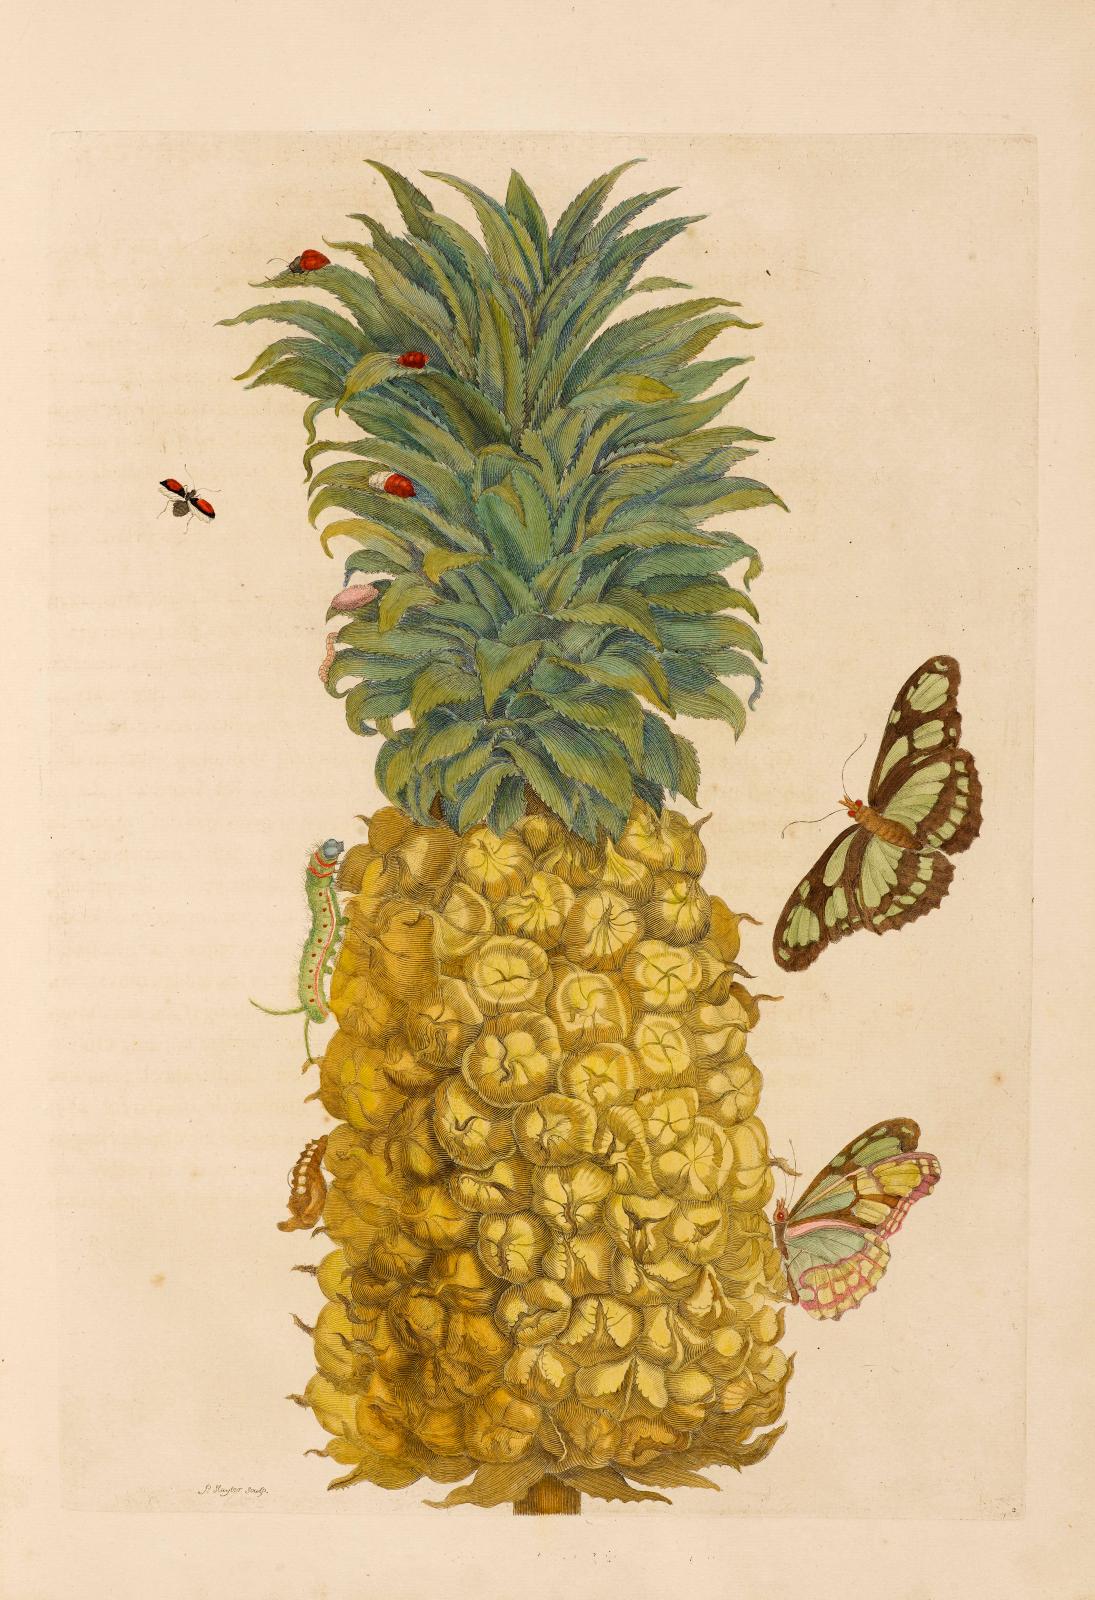 Metamorphosis insectorum Surinamensium constitue l’ouvrage le plus important de la naturaliste Maria Sibylla Merian (1647-1717), une des p